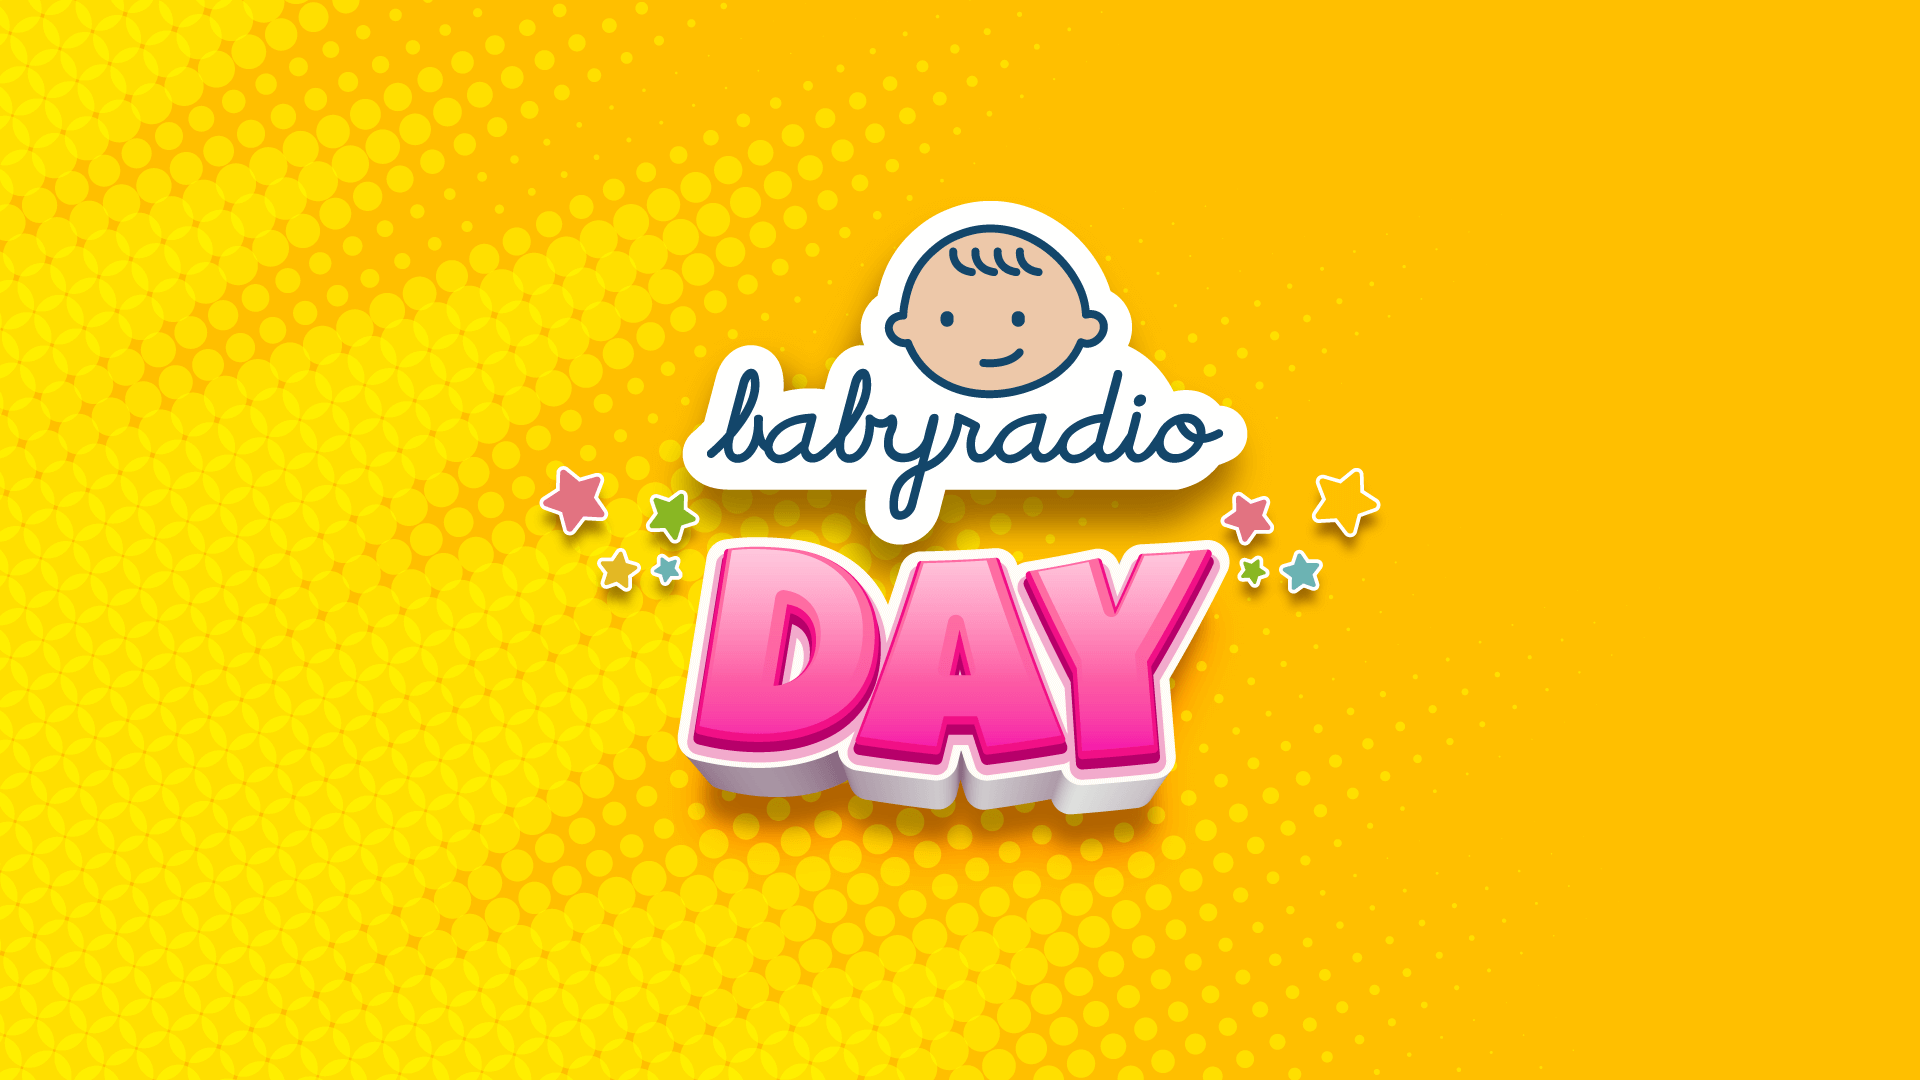 Babyradio DAY